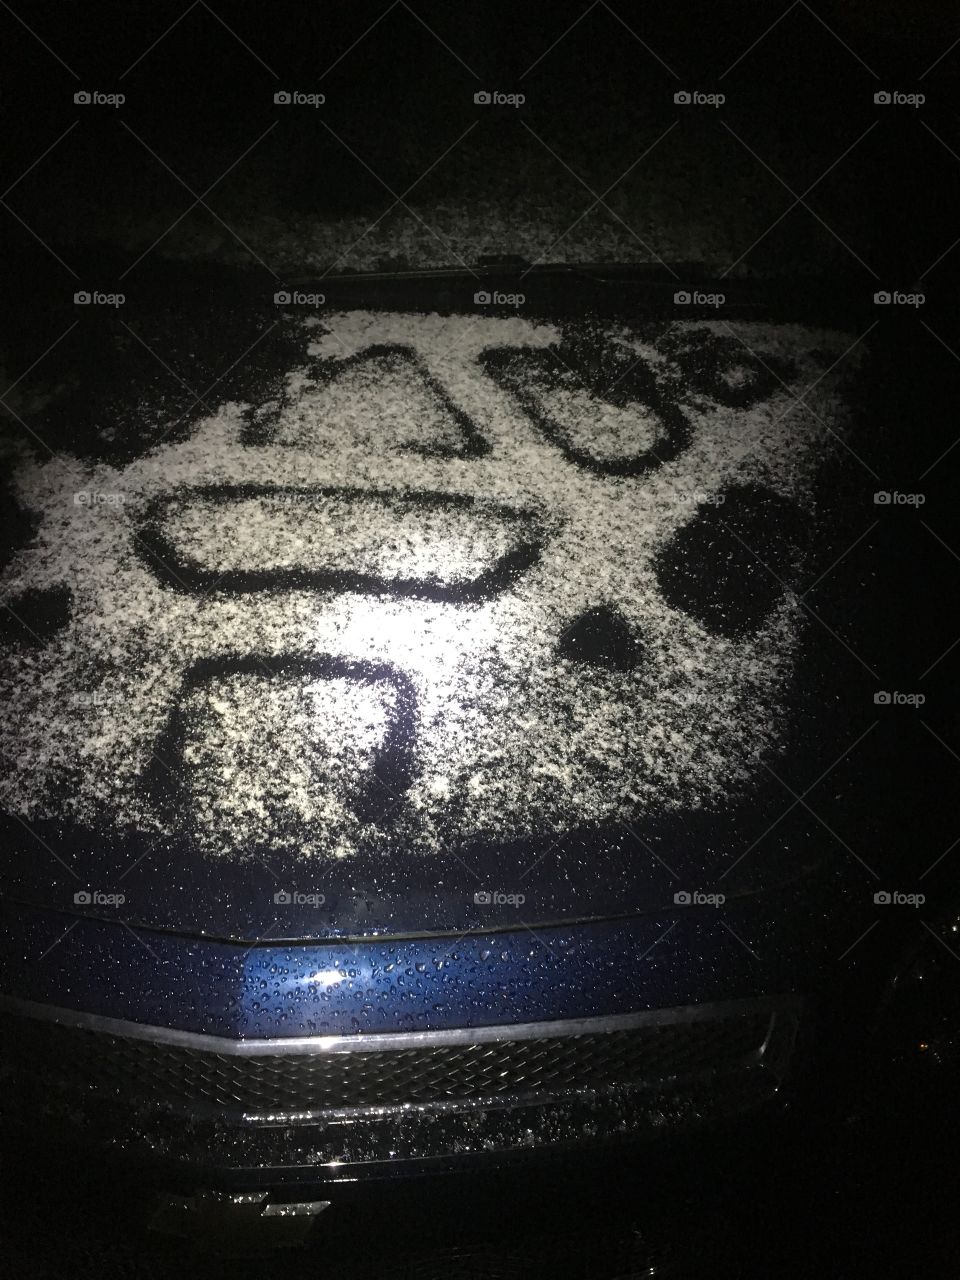 Design left on car by snow